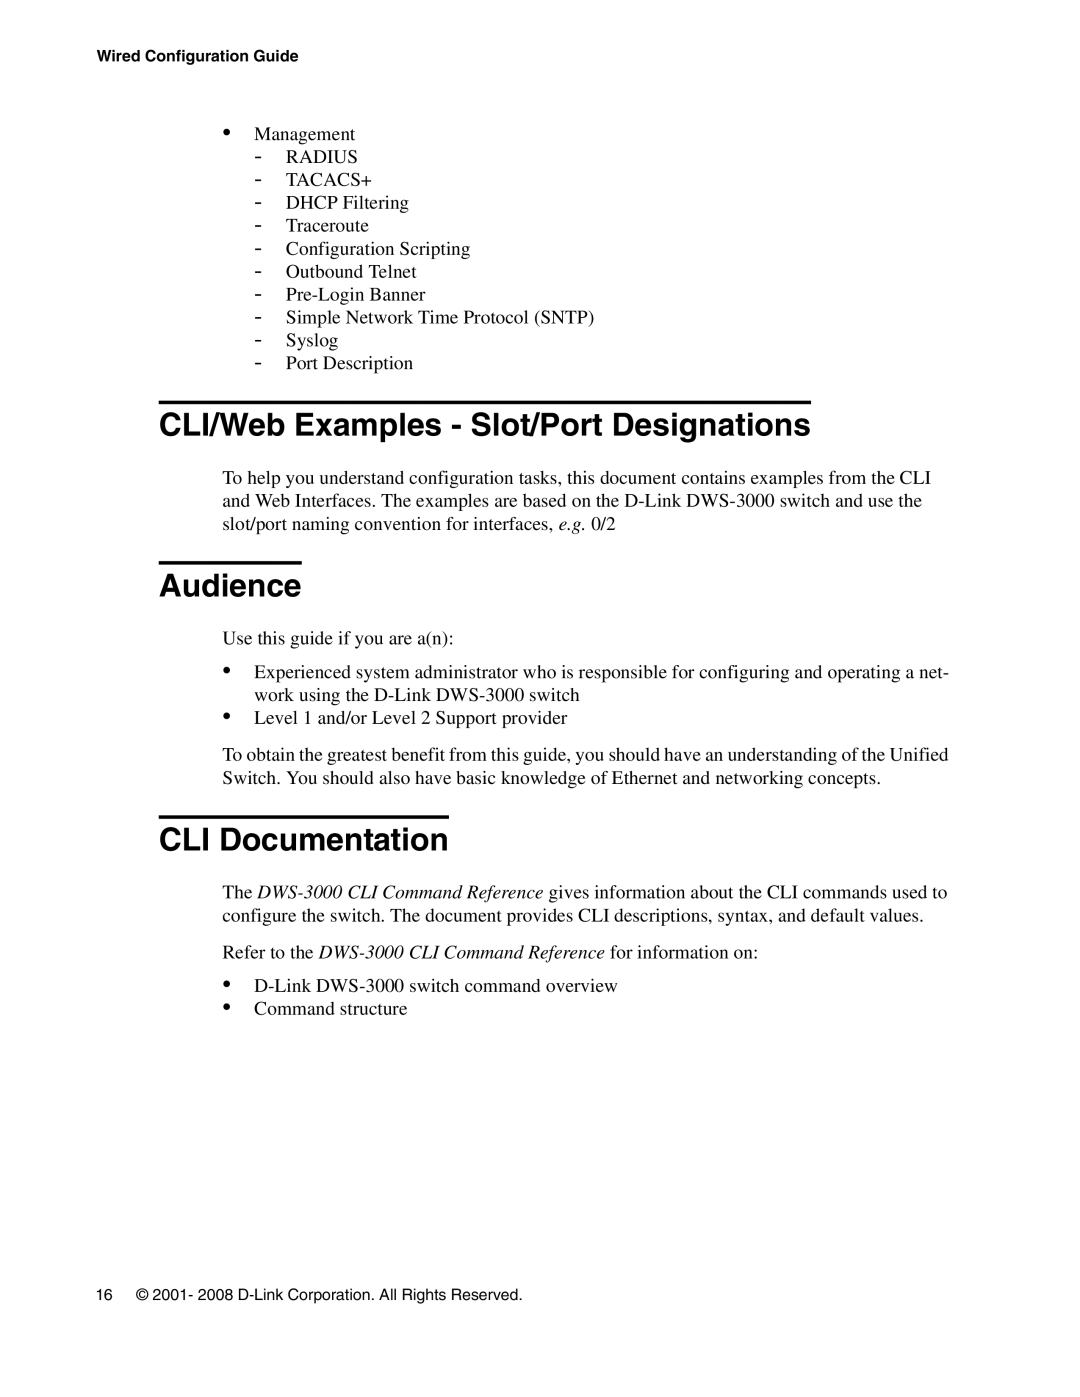 D-Link DWS-3000 manual CLI/Web Examples Slot/Port Designations, Audience, CLI Documentation 